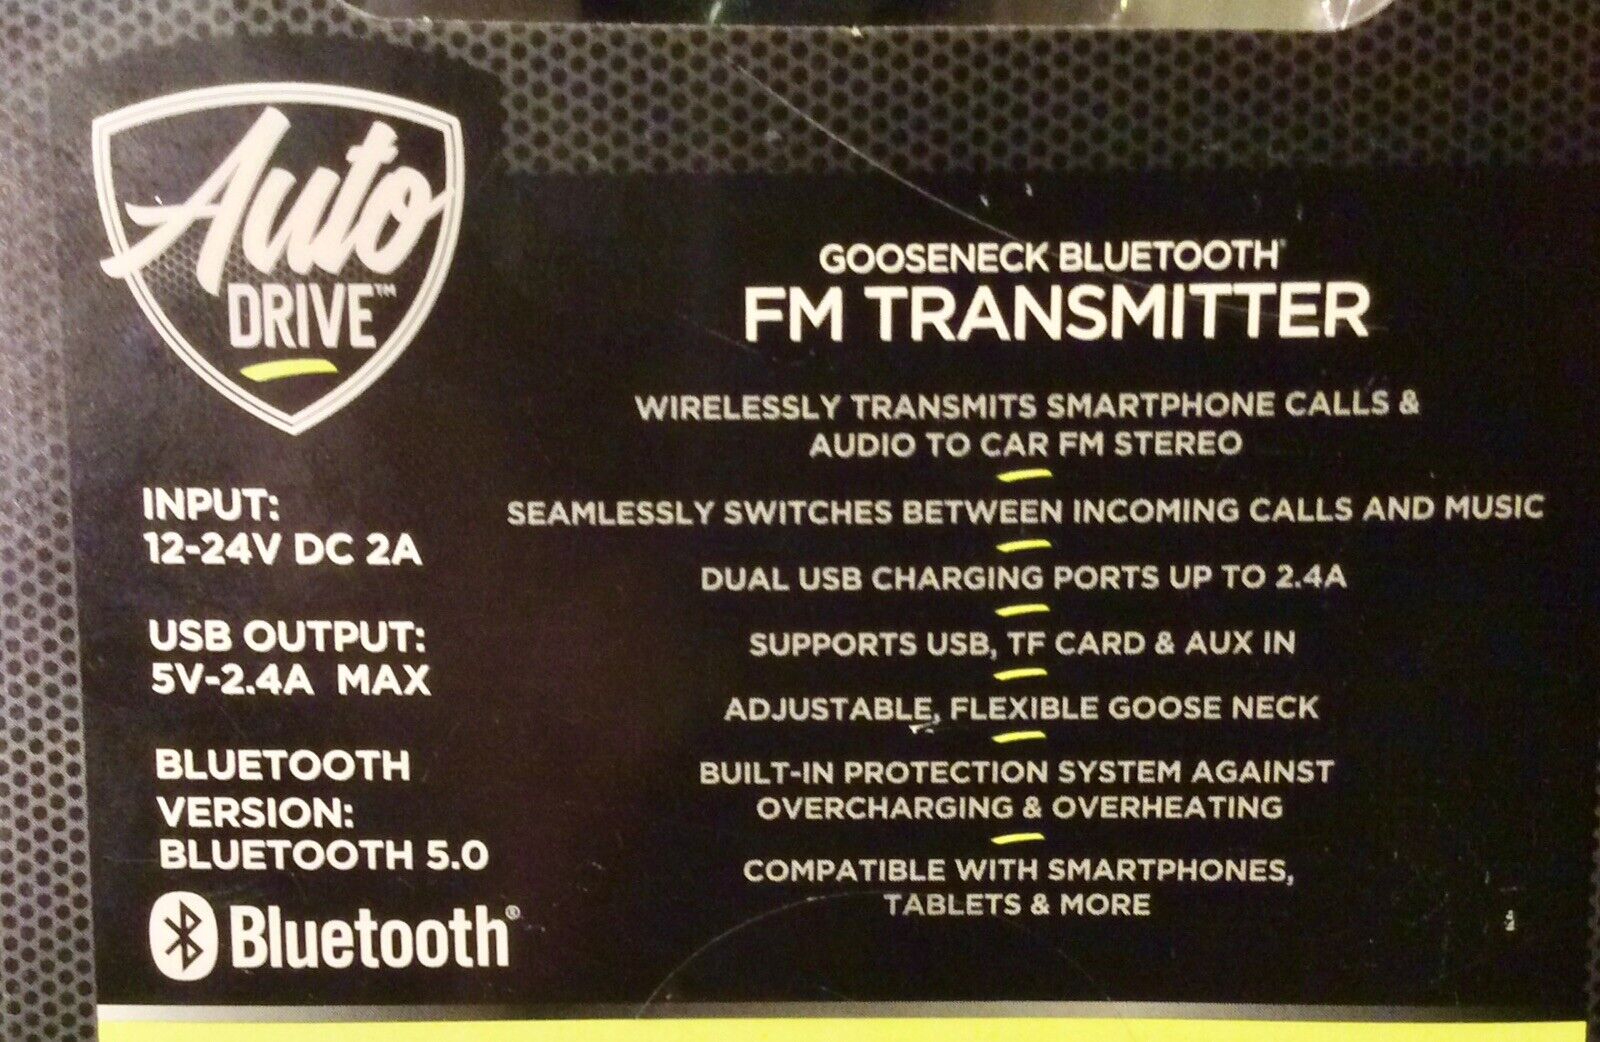 Auto Drive Gooseneck Low Profile Bluetooth FM Transmitter, Hands-Free Phone Calls, Dual USB Charging Ports